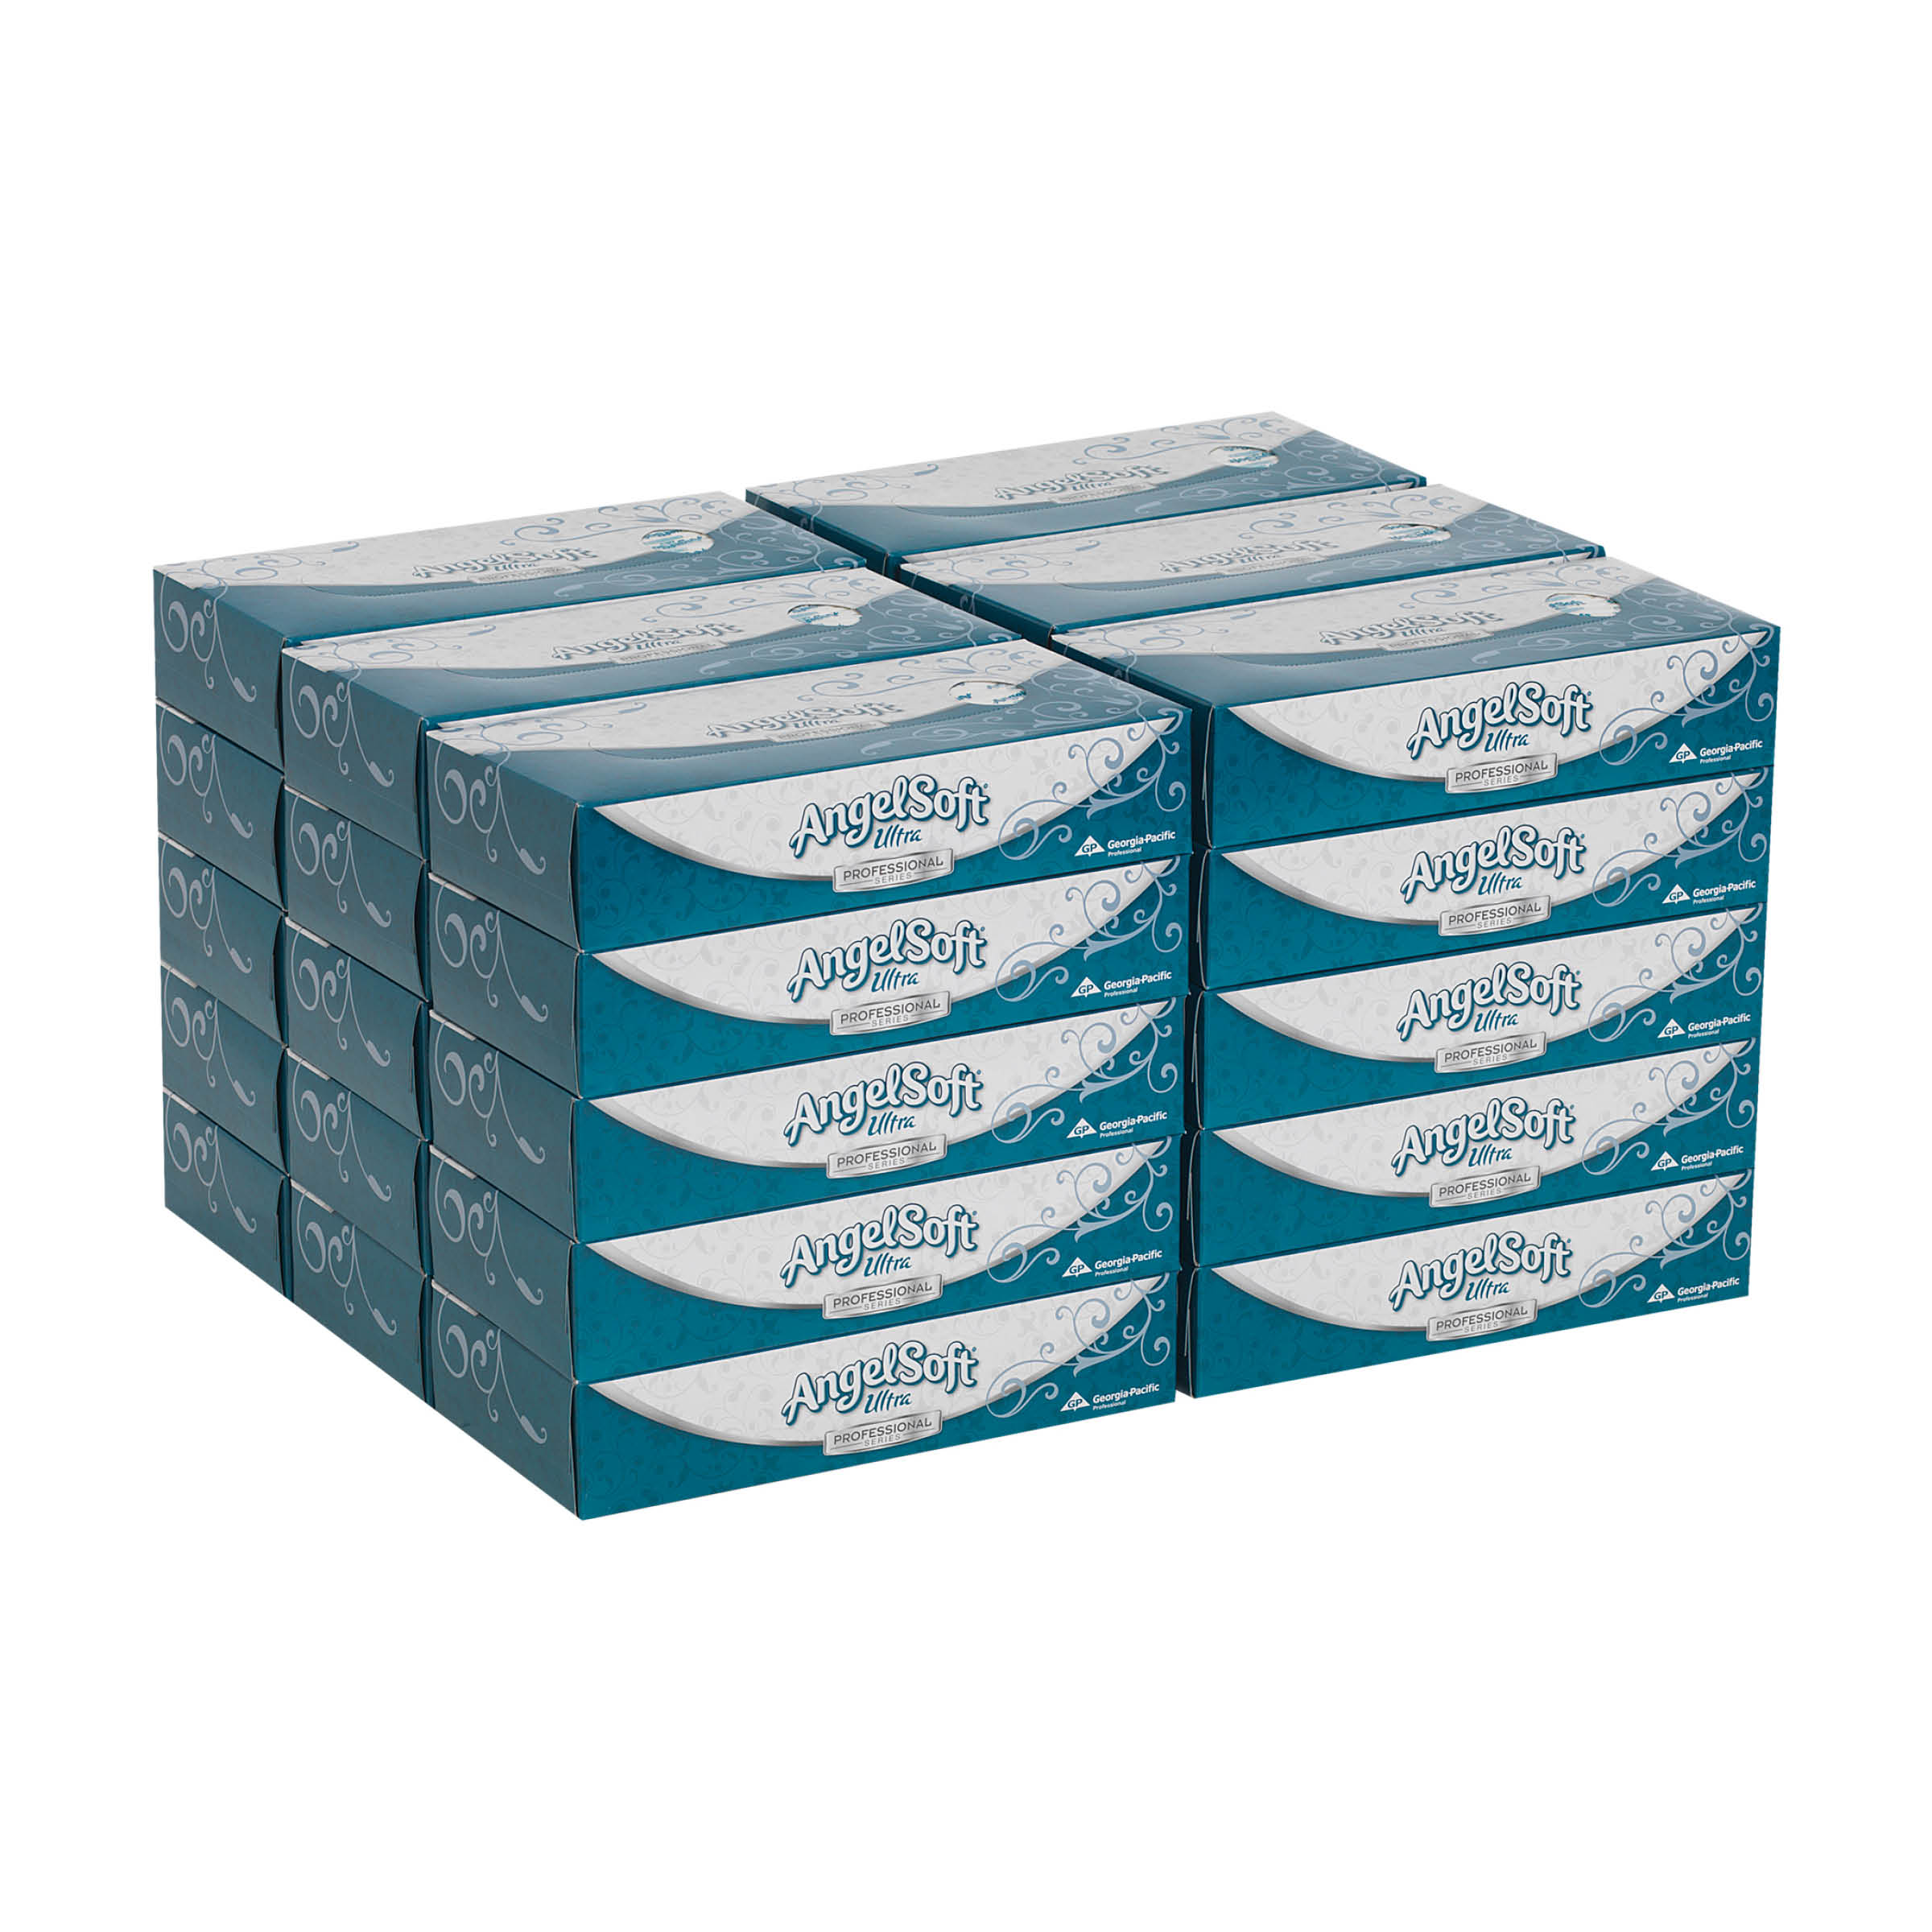 GP PRO Angel Soft Ultra Professional Series® Premium 2-Ply Facial Tissue, Flat Box, 48560, 125 SHEETS /BOX, 30 BOXES/CASE